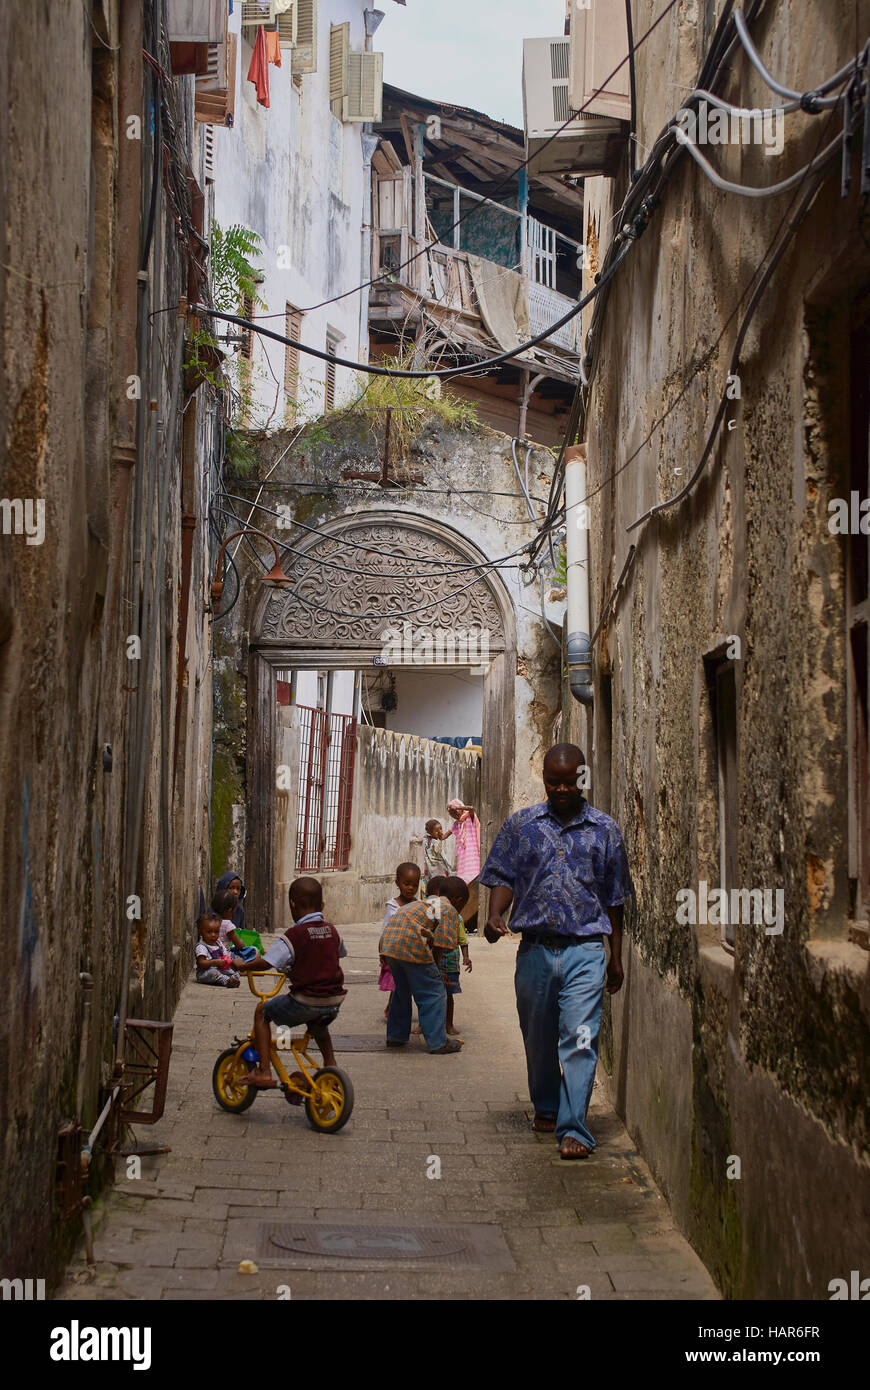 Street life in ancient stone town Zanzibar, Tanzania Stock Photo